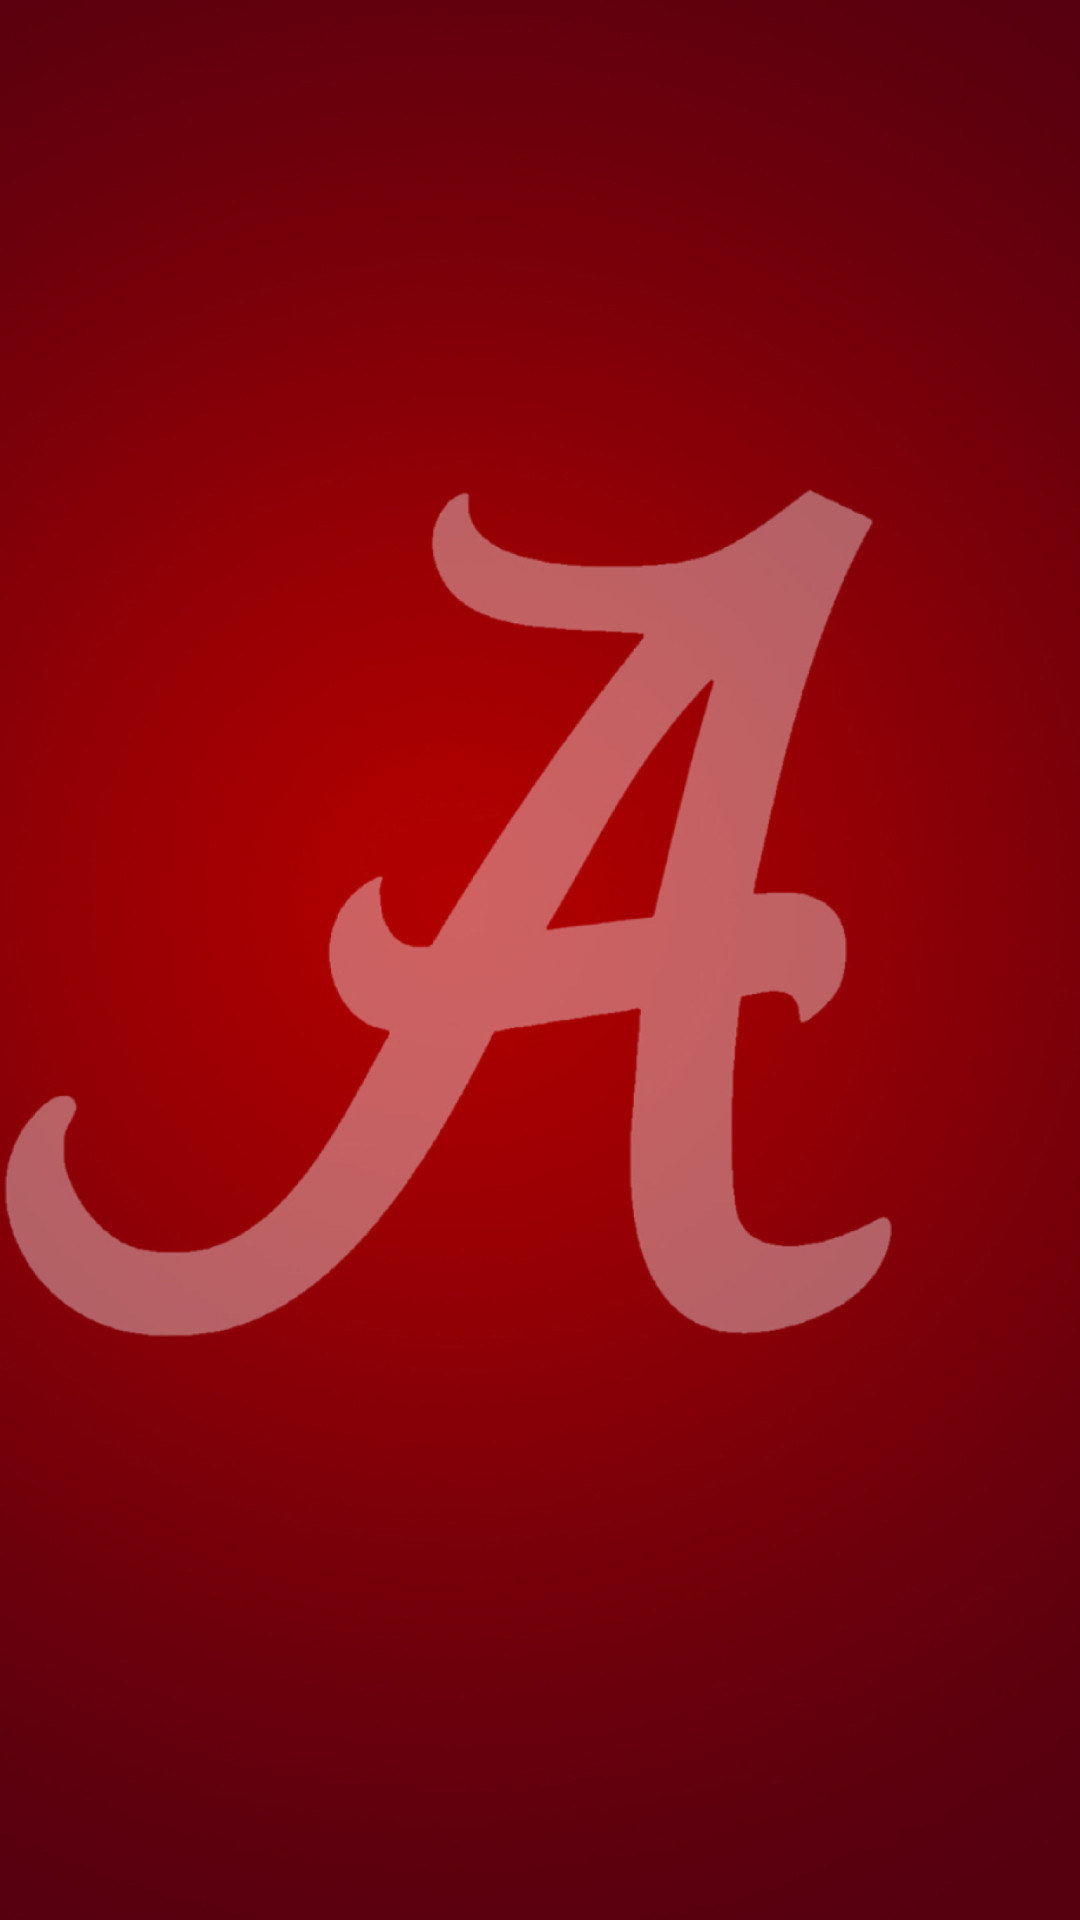 1080x1920 Alabama-Football-Wallpaper-HD-for-Android.jpg 1,080Ã1,920